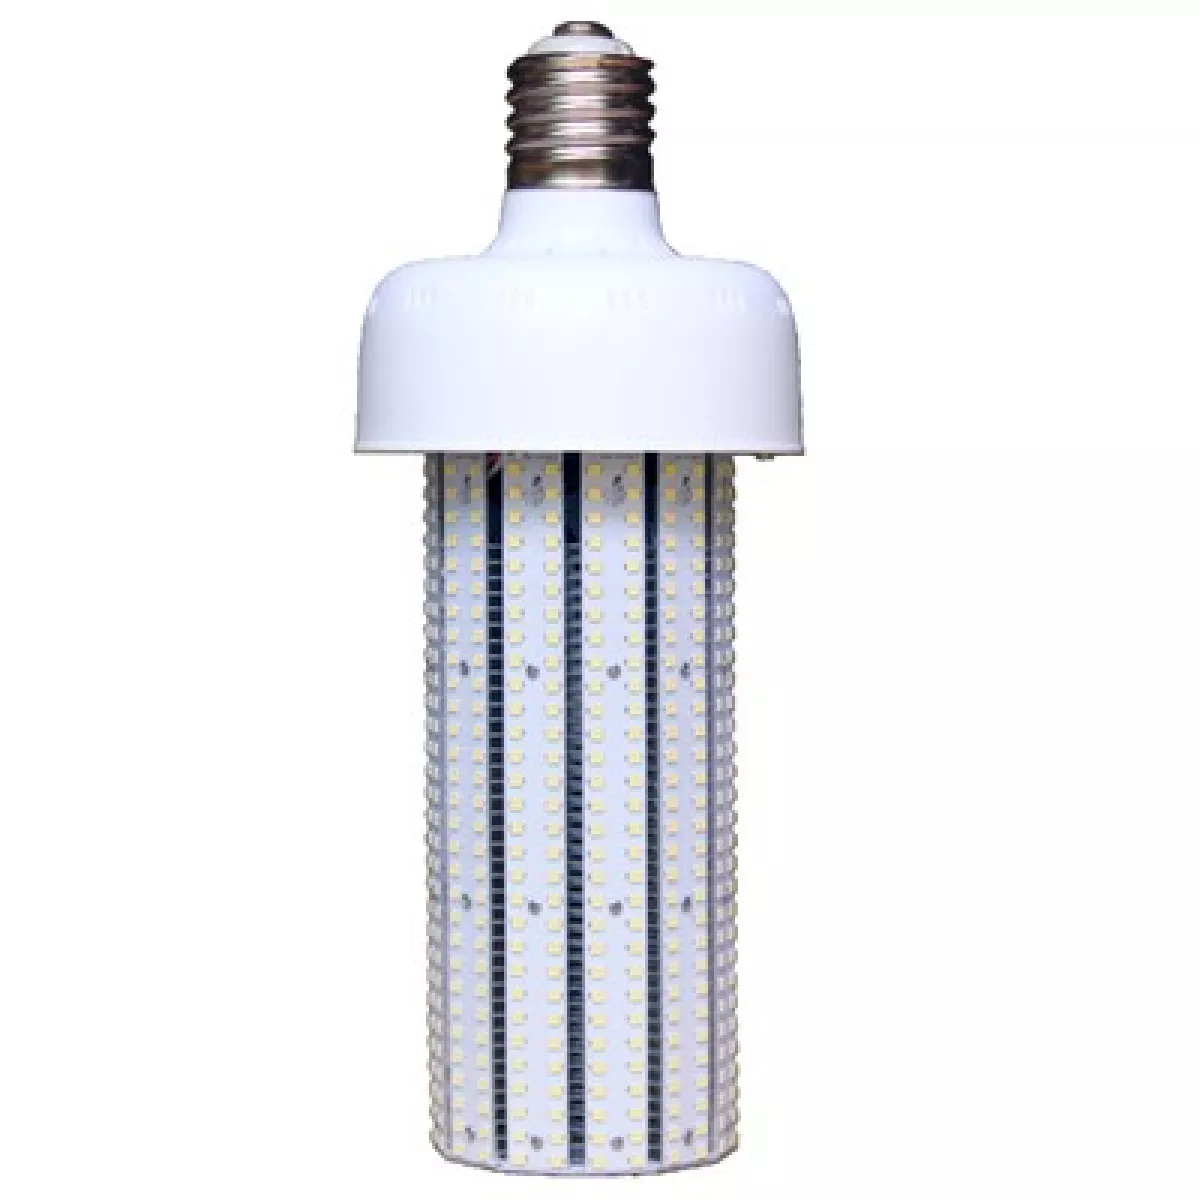 #3 - LEDlife 120W LED pære - Erstatning for 400W Metalhalogen, E40 - Kulør : Neutral